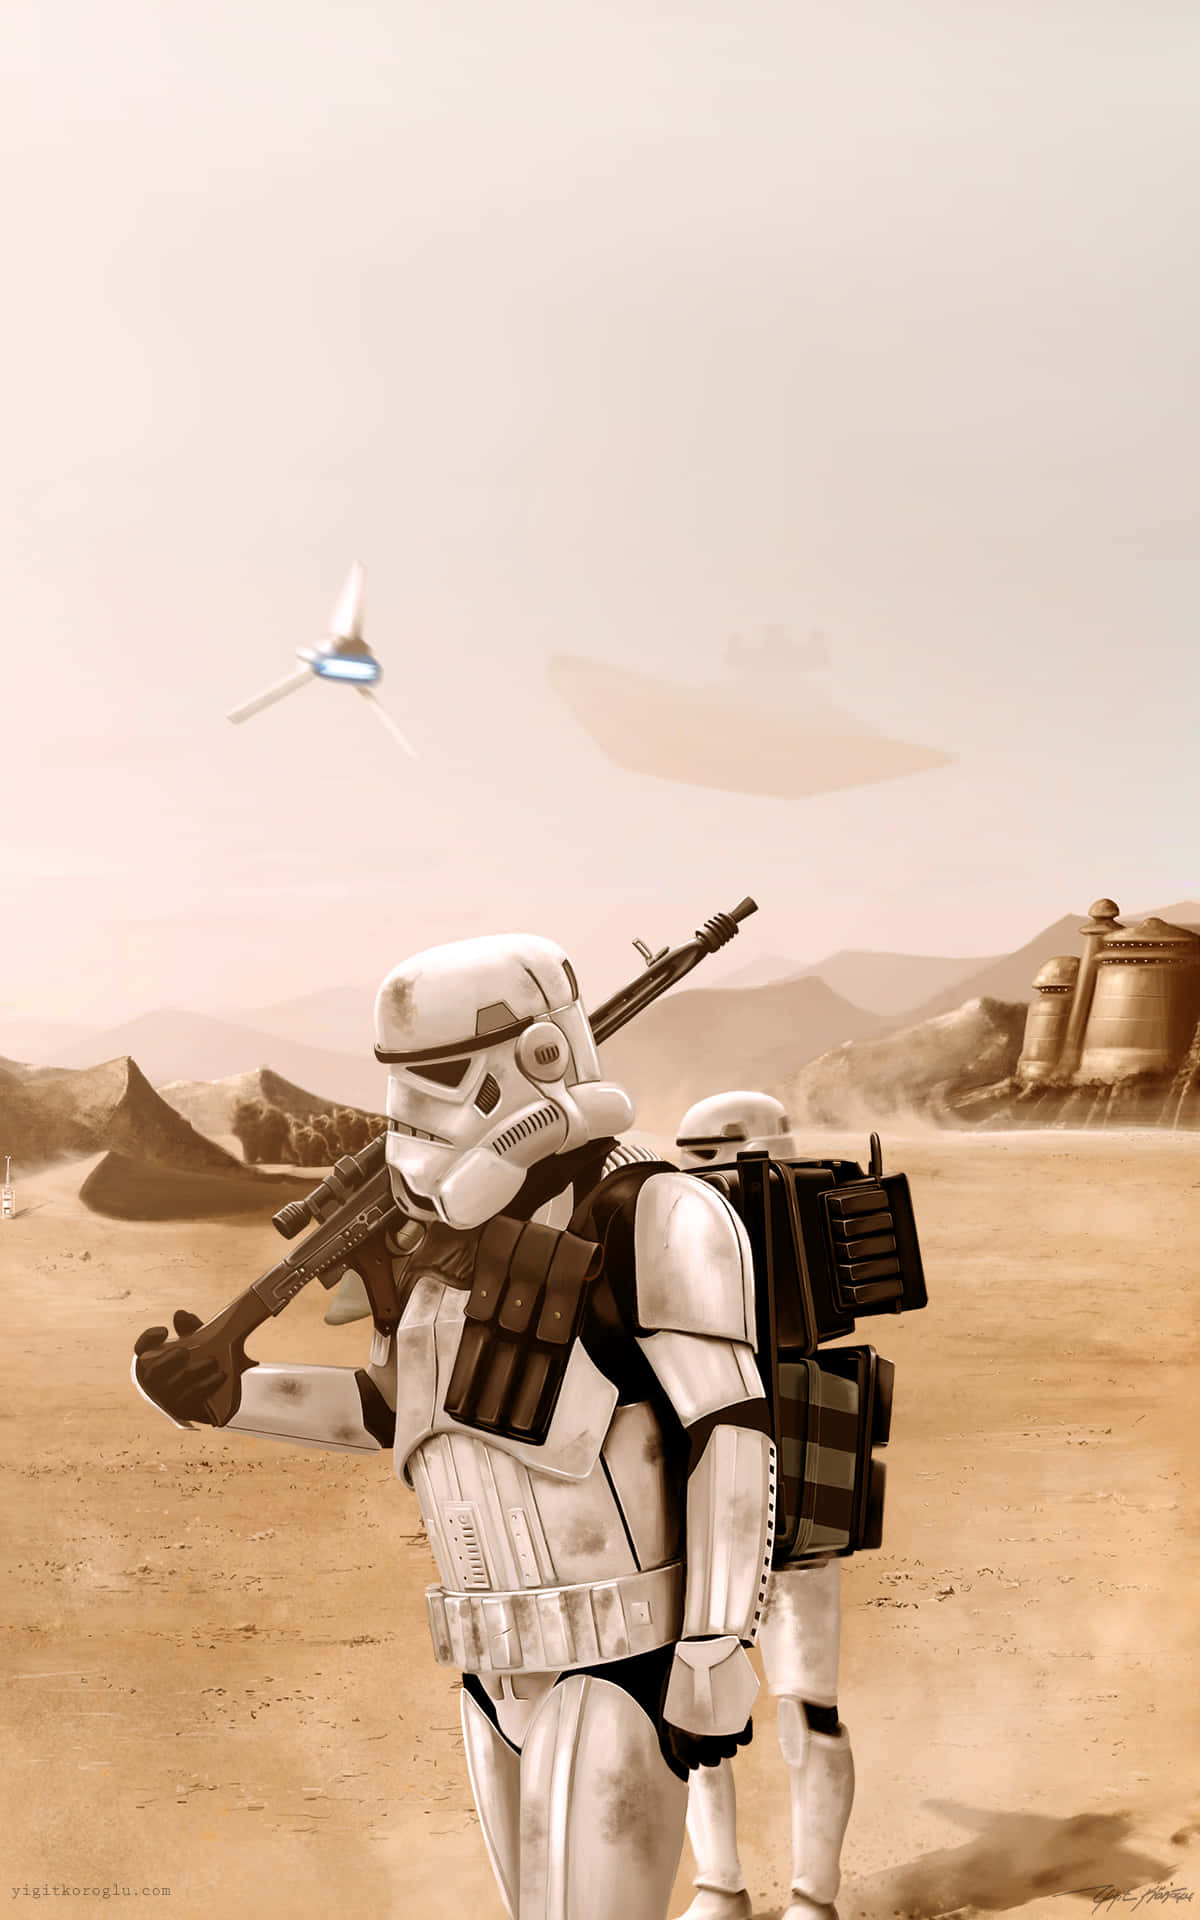 Clone Trooper In Tatooine Background